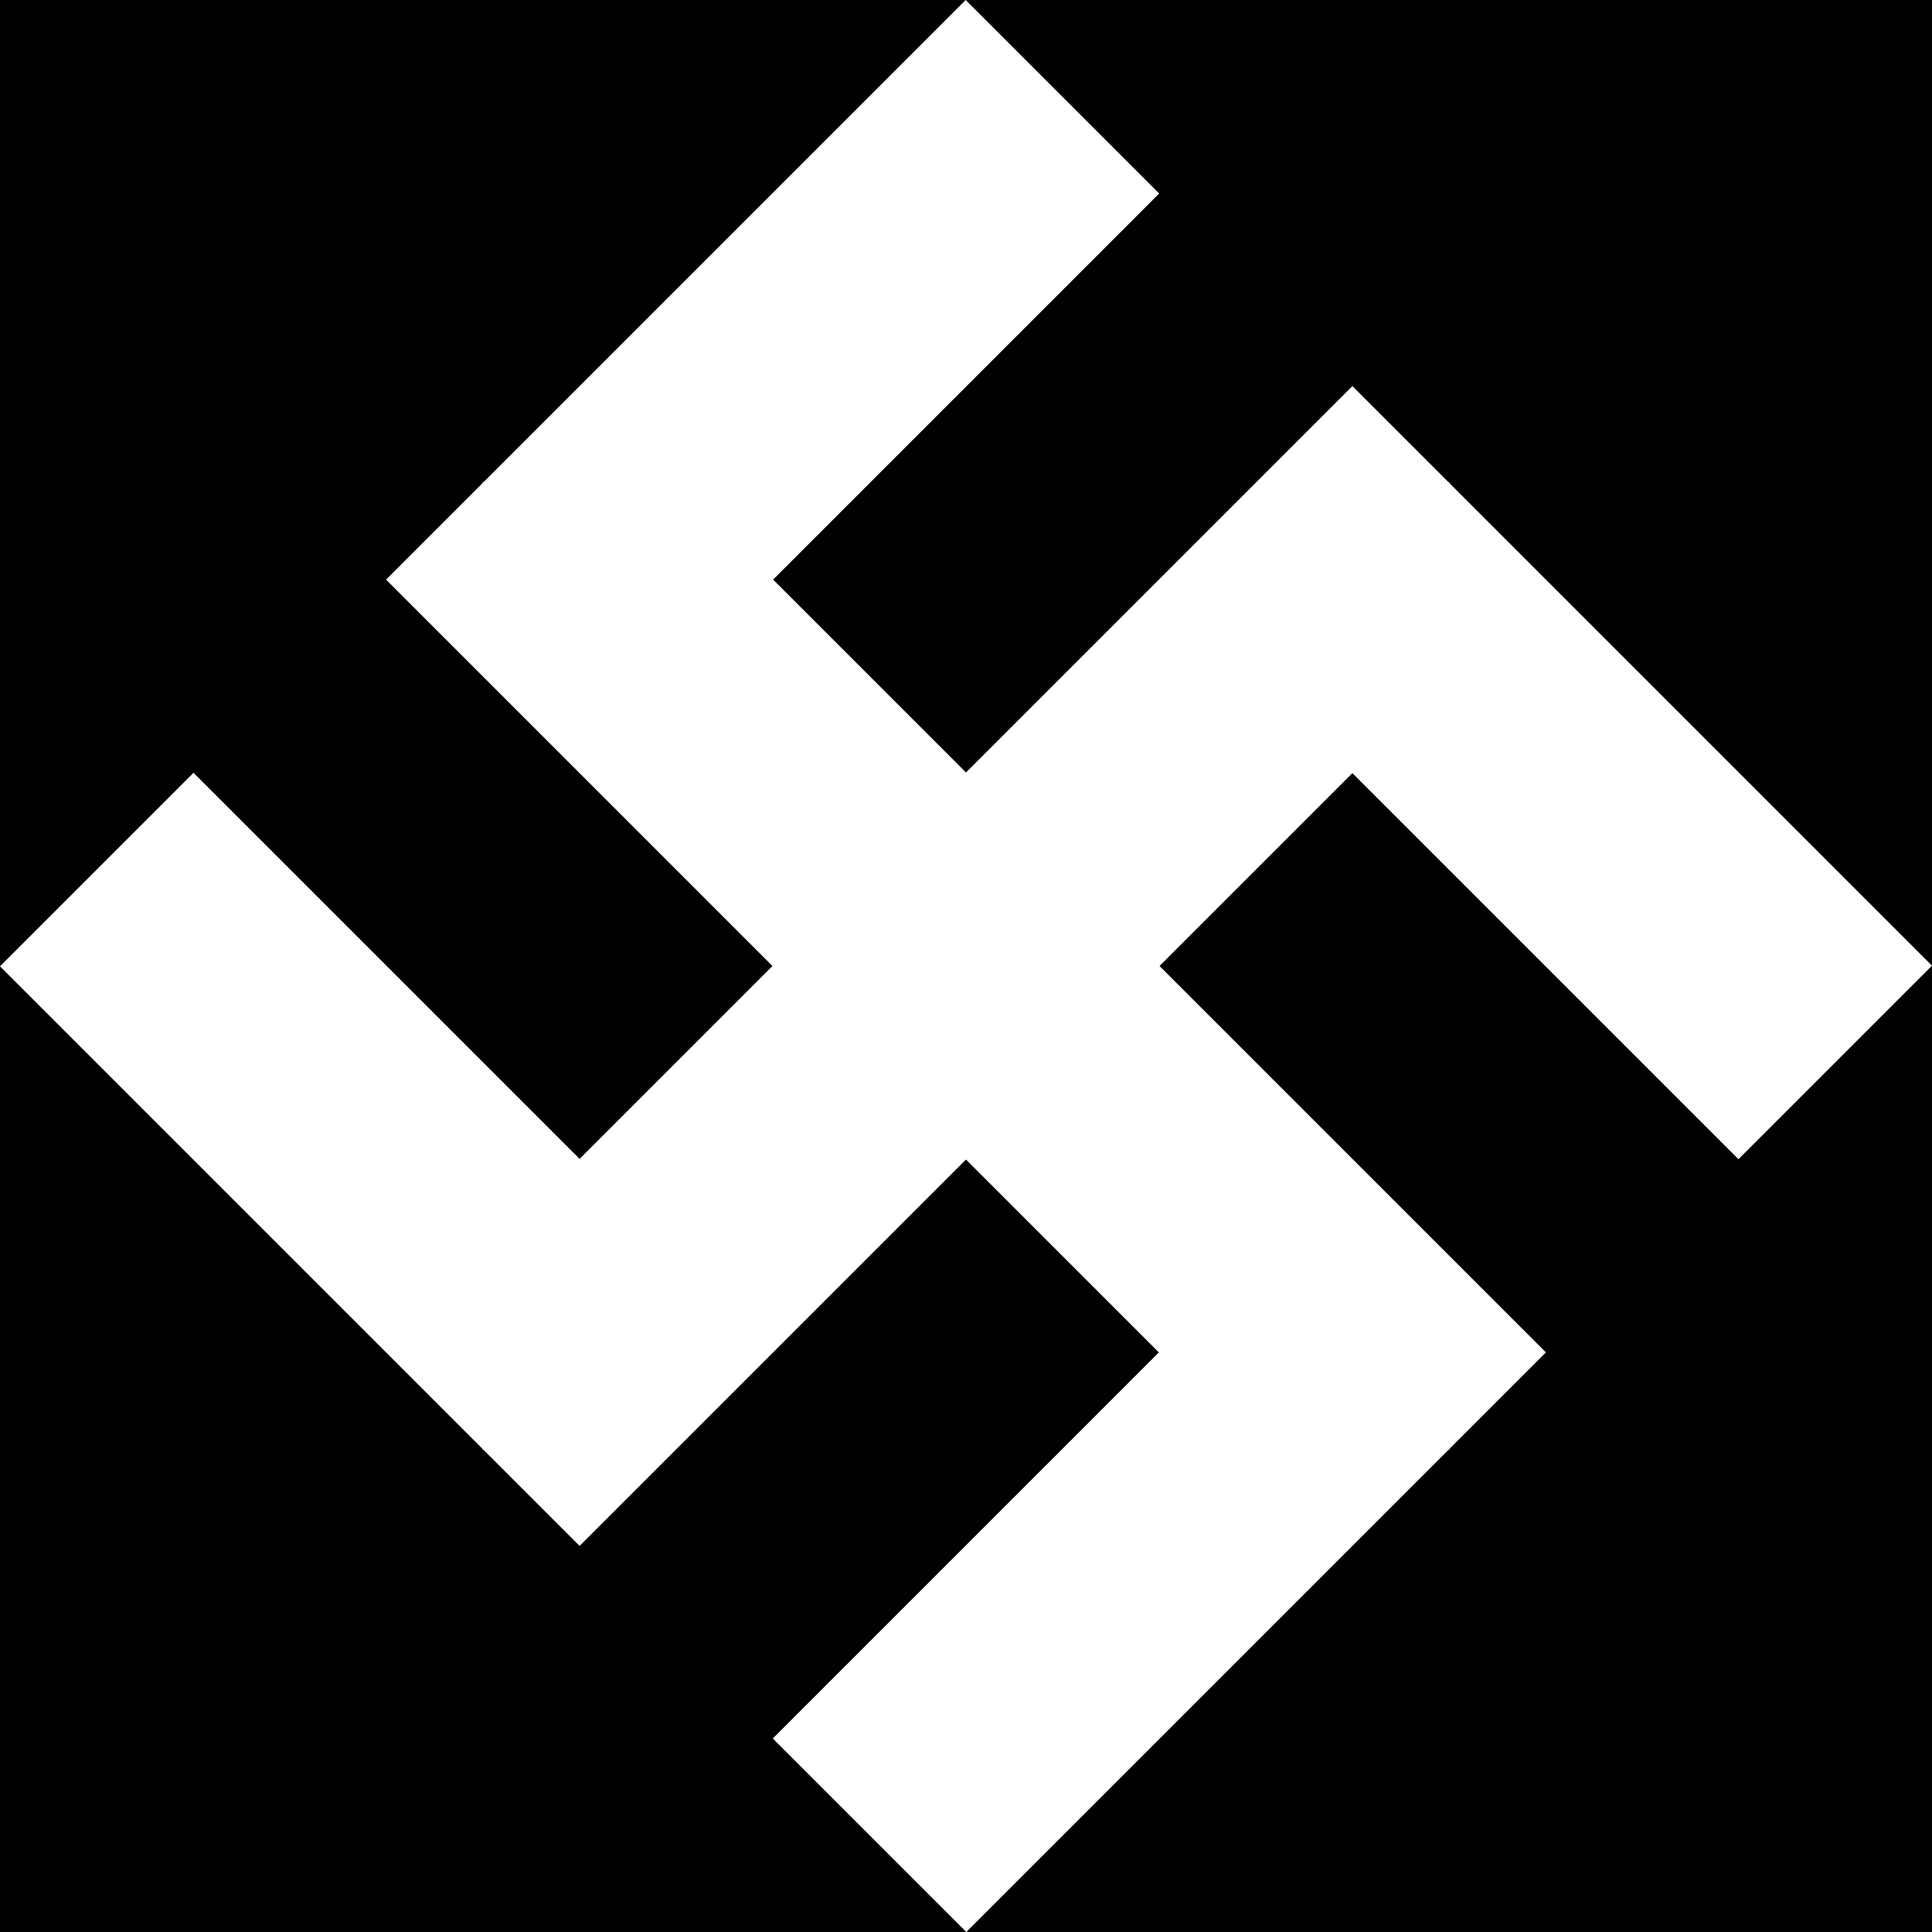 Swastika logo vector download free